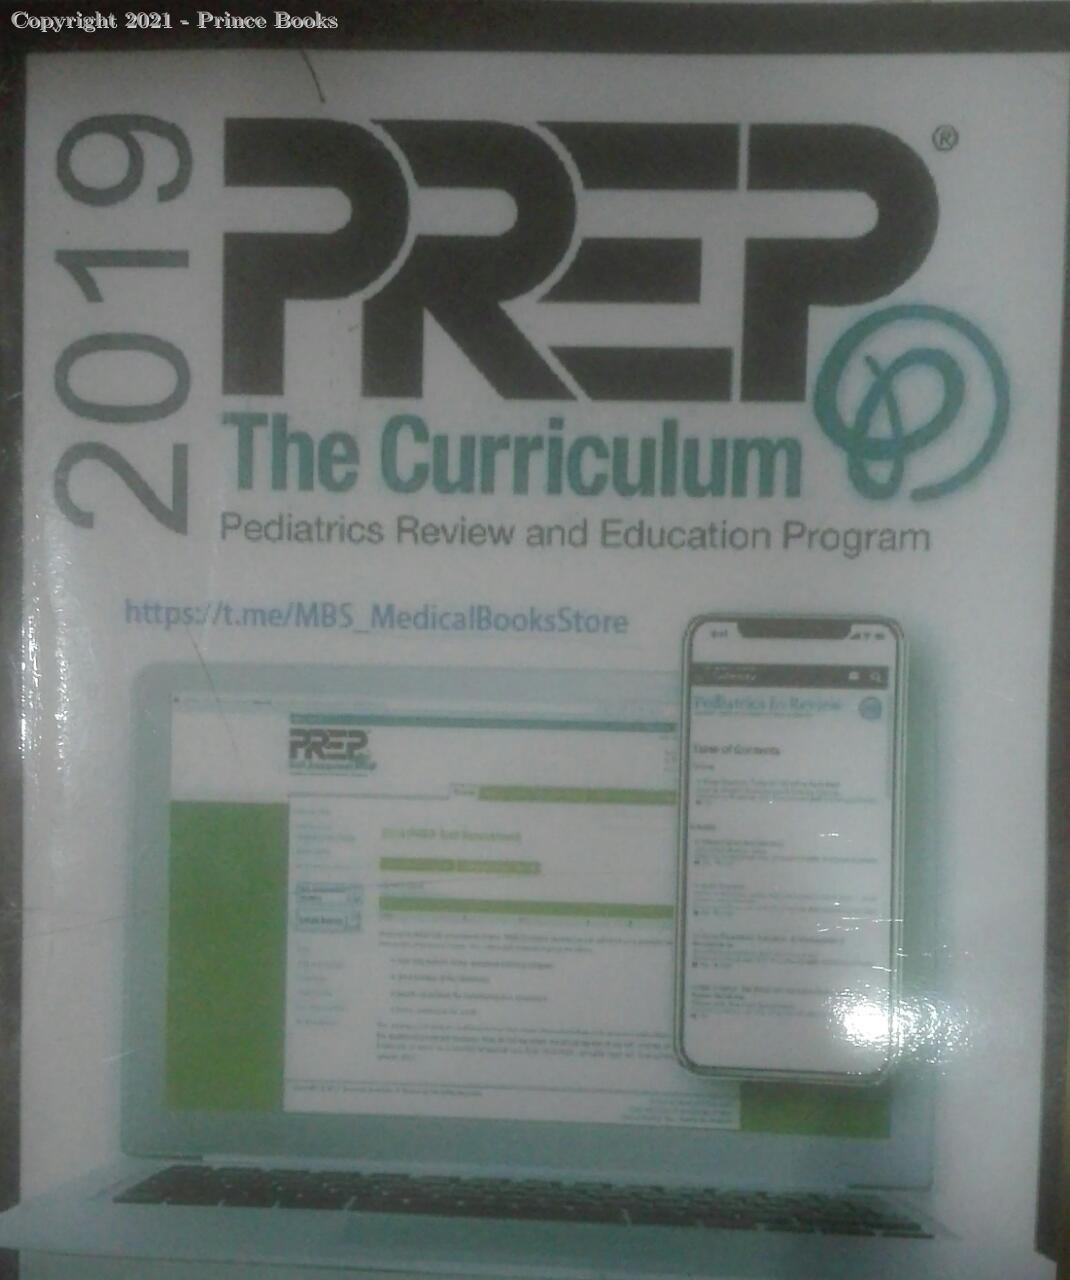 prep the curriculum pediarics eview and education program 2019 2vol set, 1e